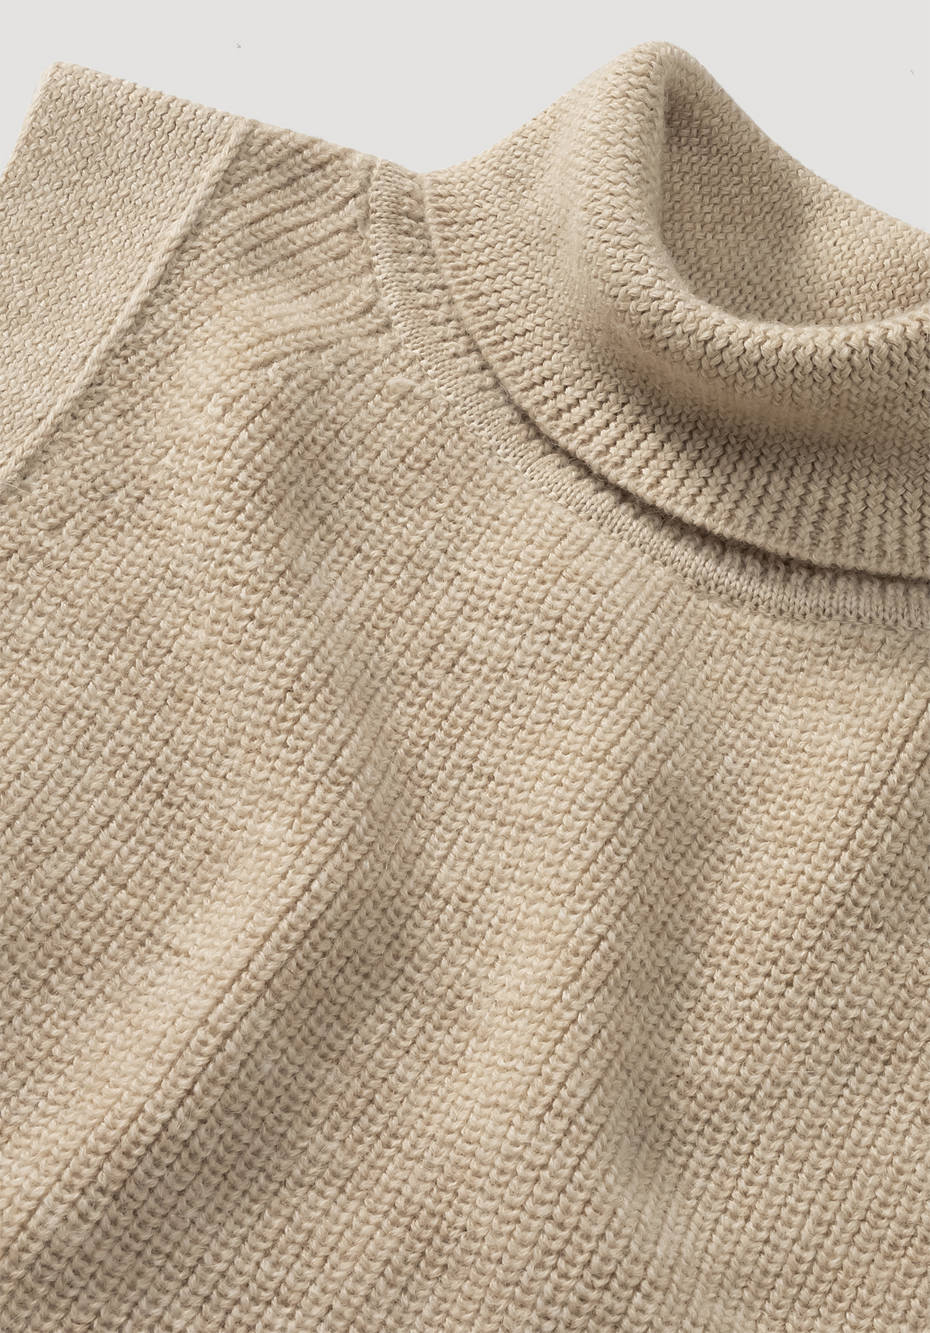 Sweater made from organic merino wool with alpaca